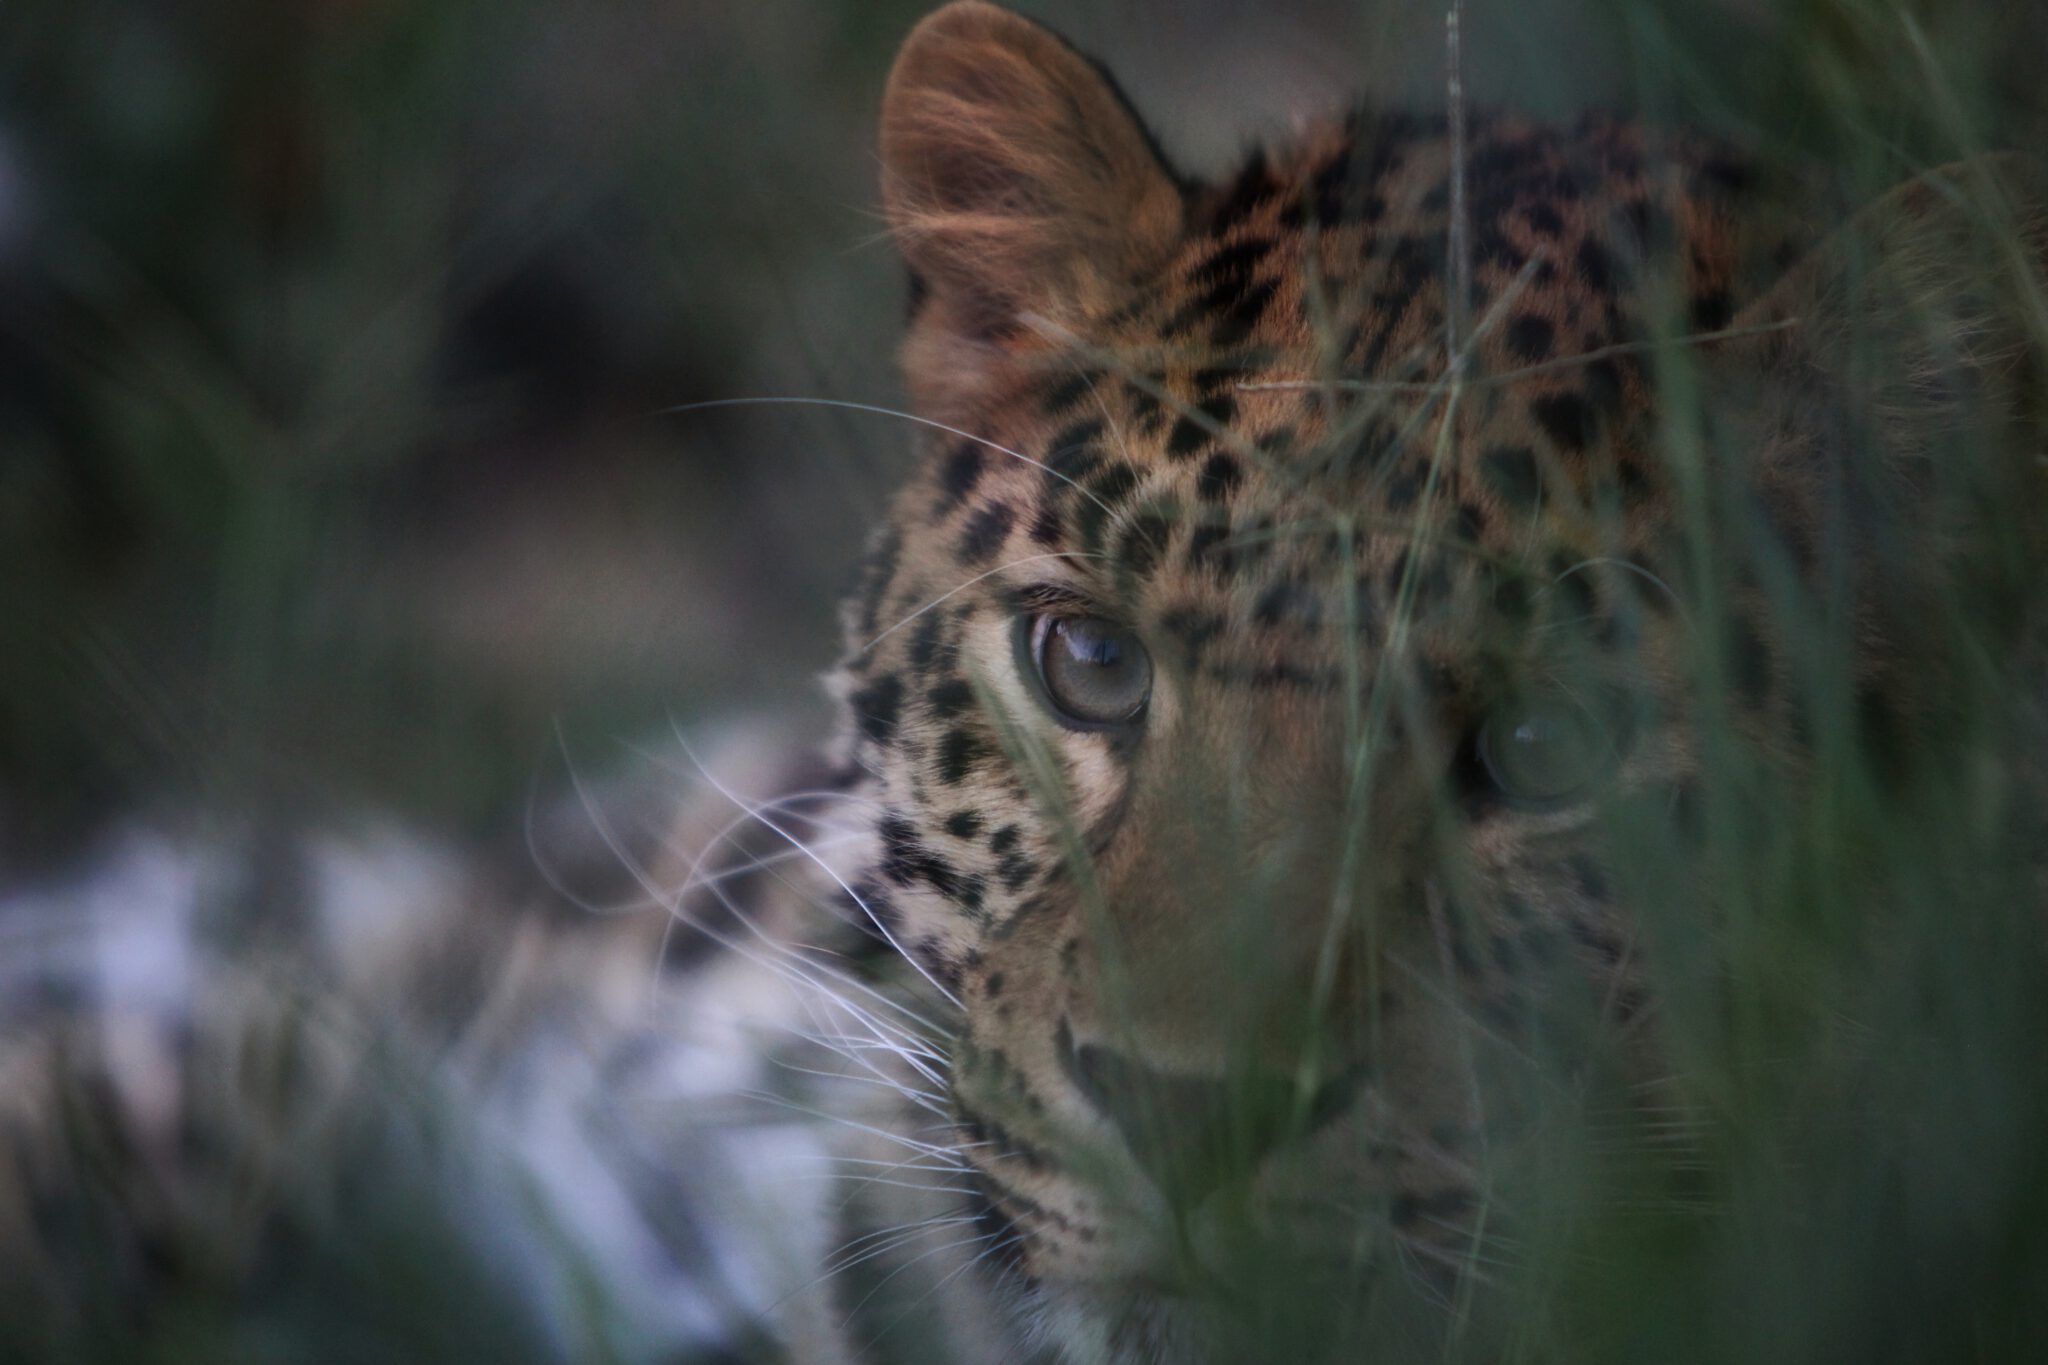 Info Shymkent - The Amur Leopard 'Amur' of the Shymkent Zoo